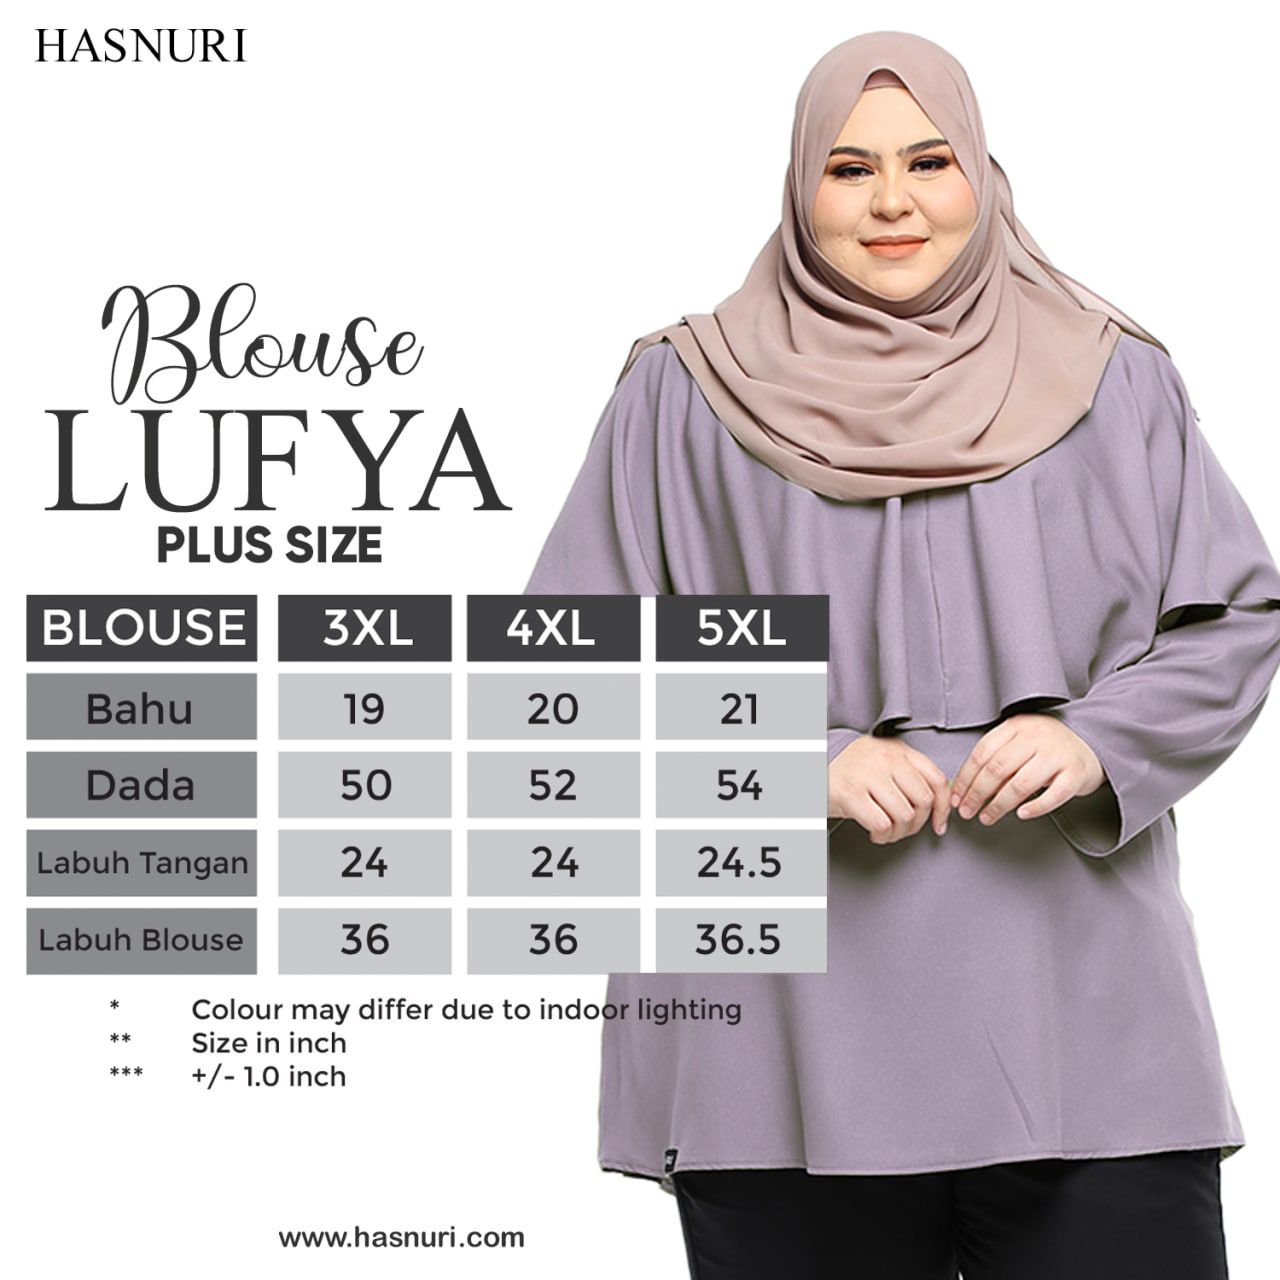 Blouse Lufya Plus Size - Dusty Orange